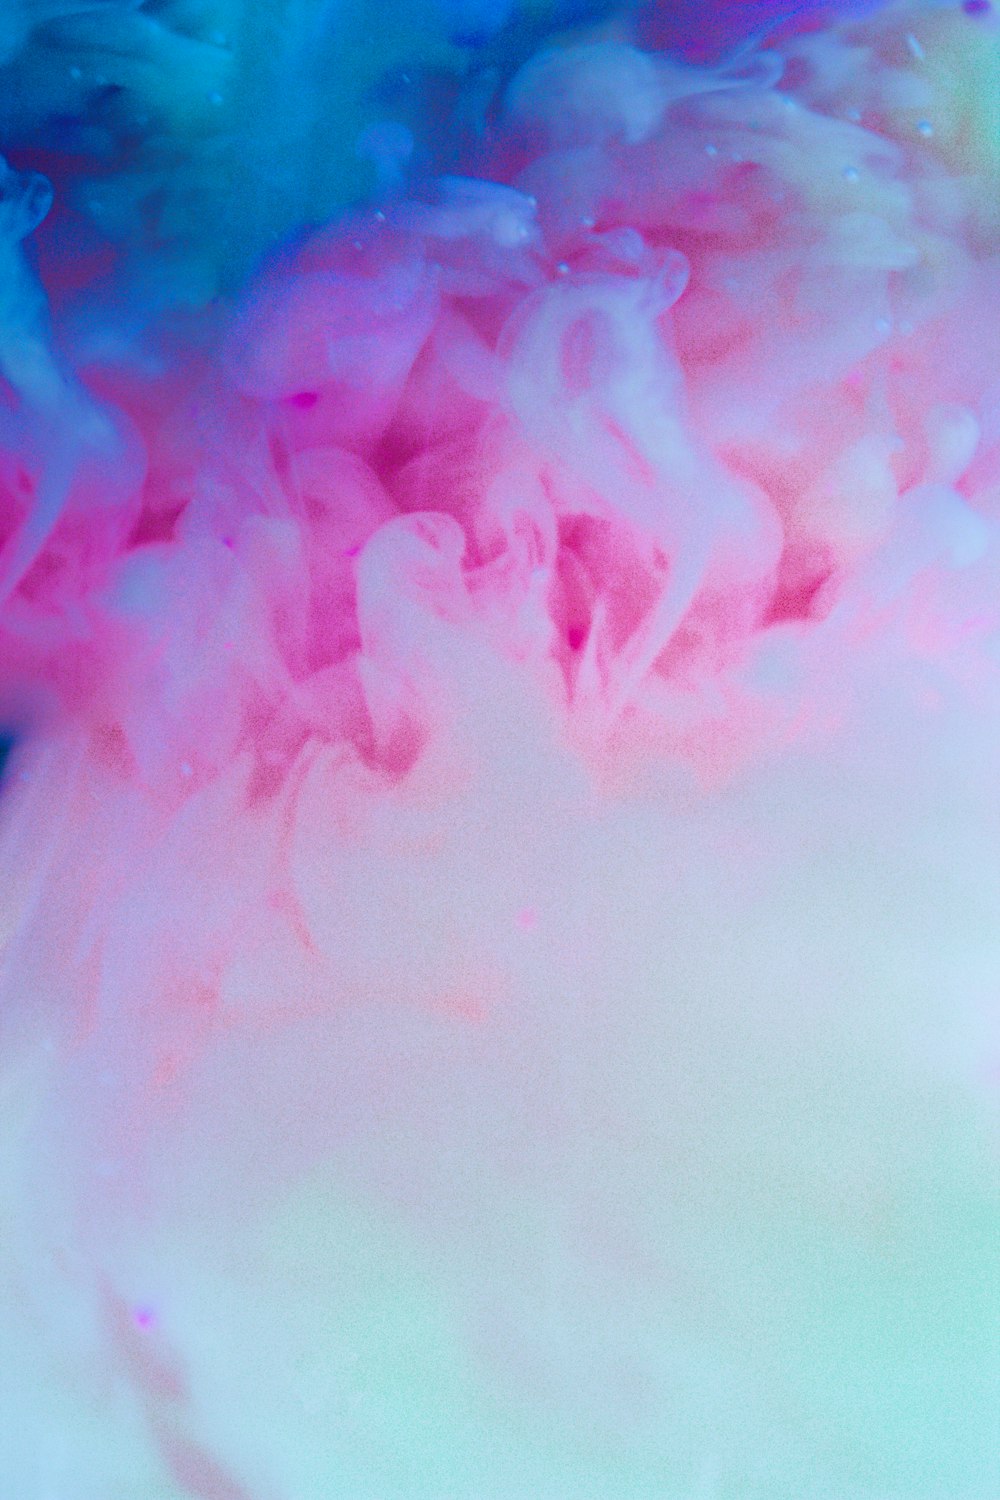 pink smoke on blue background